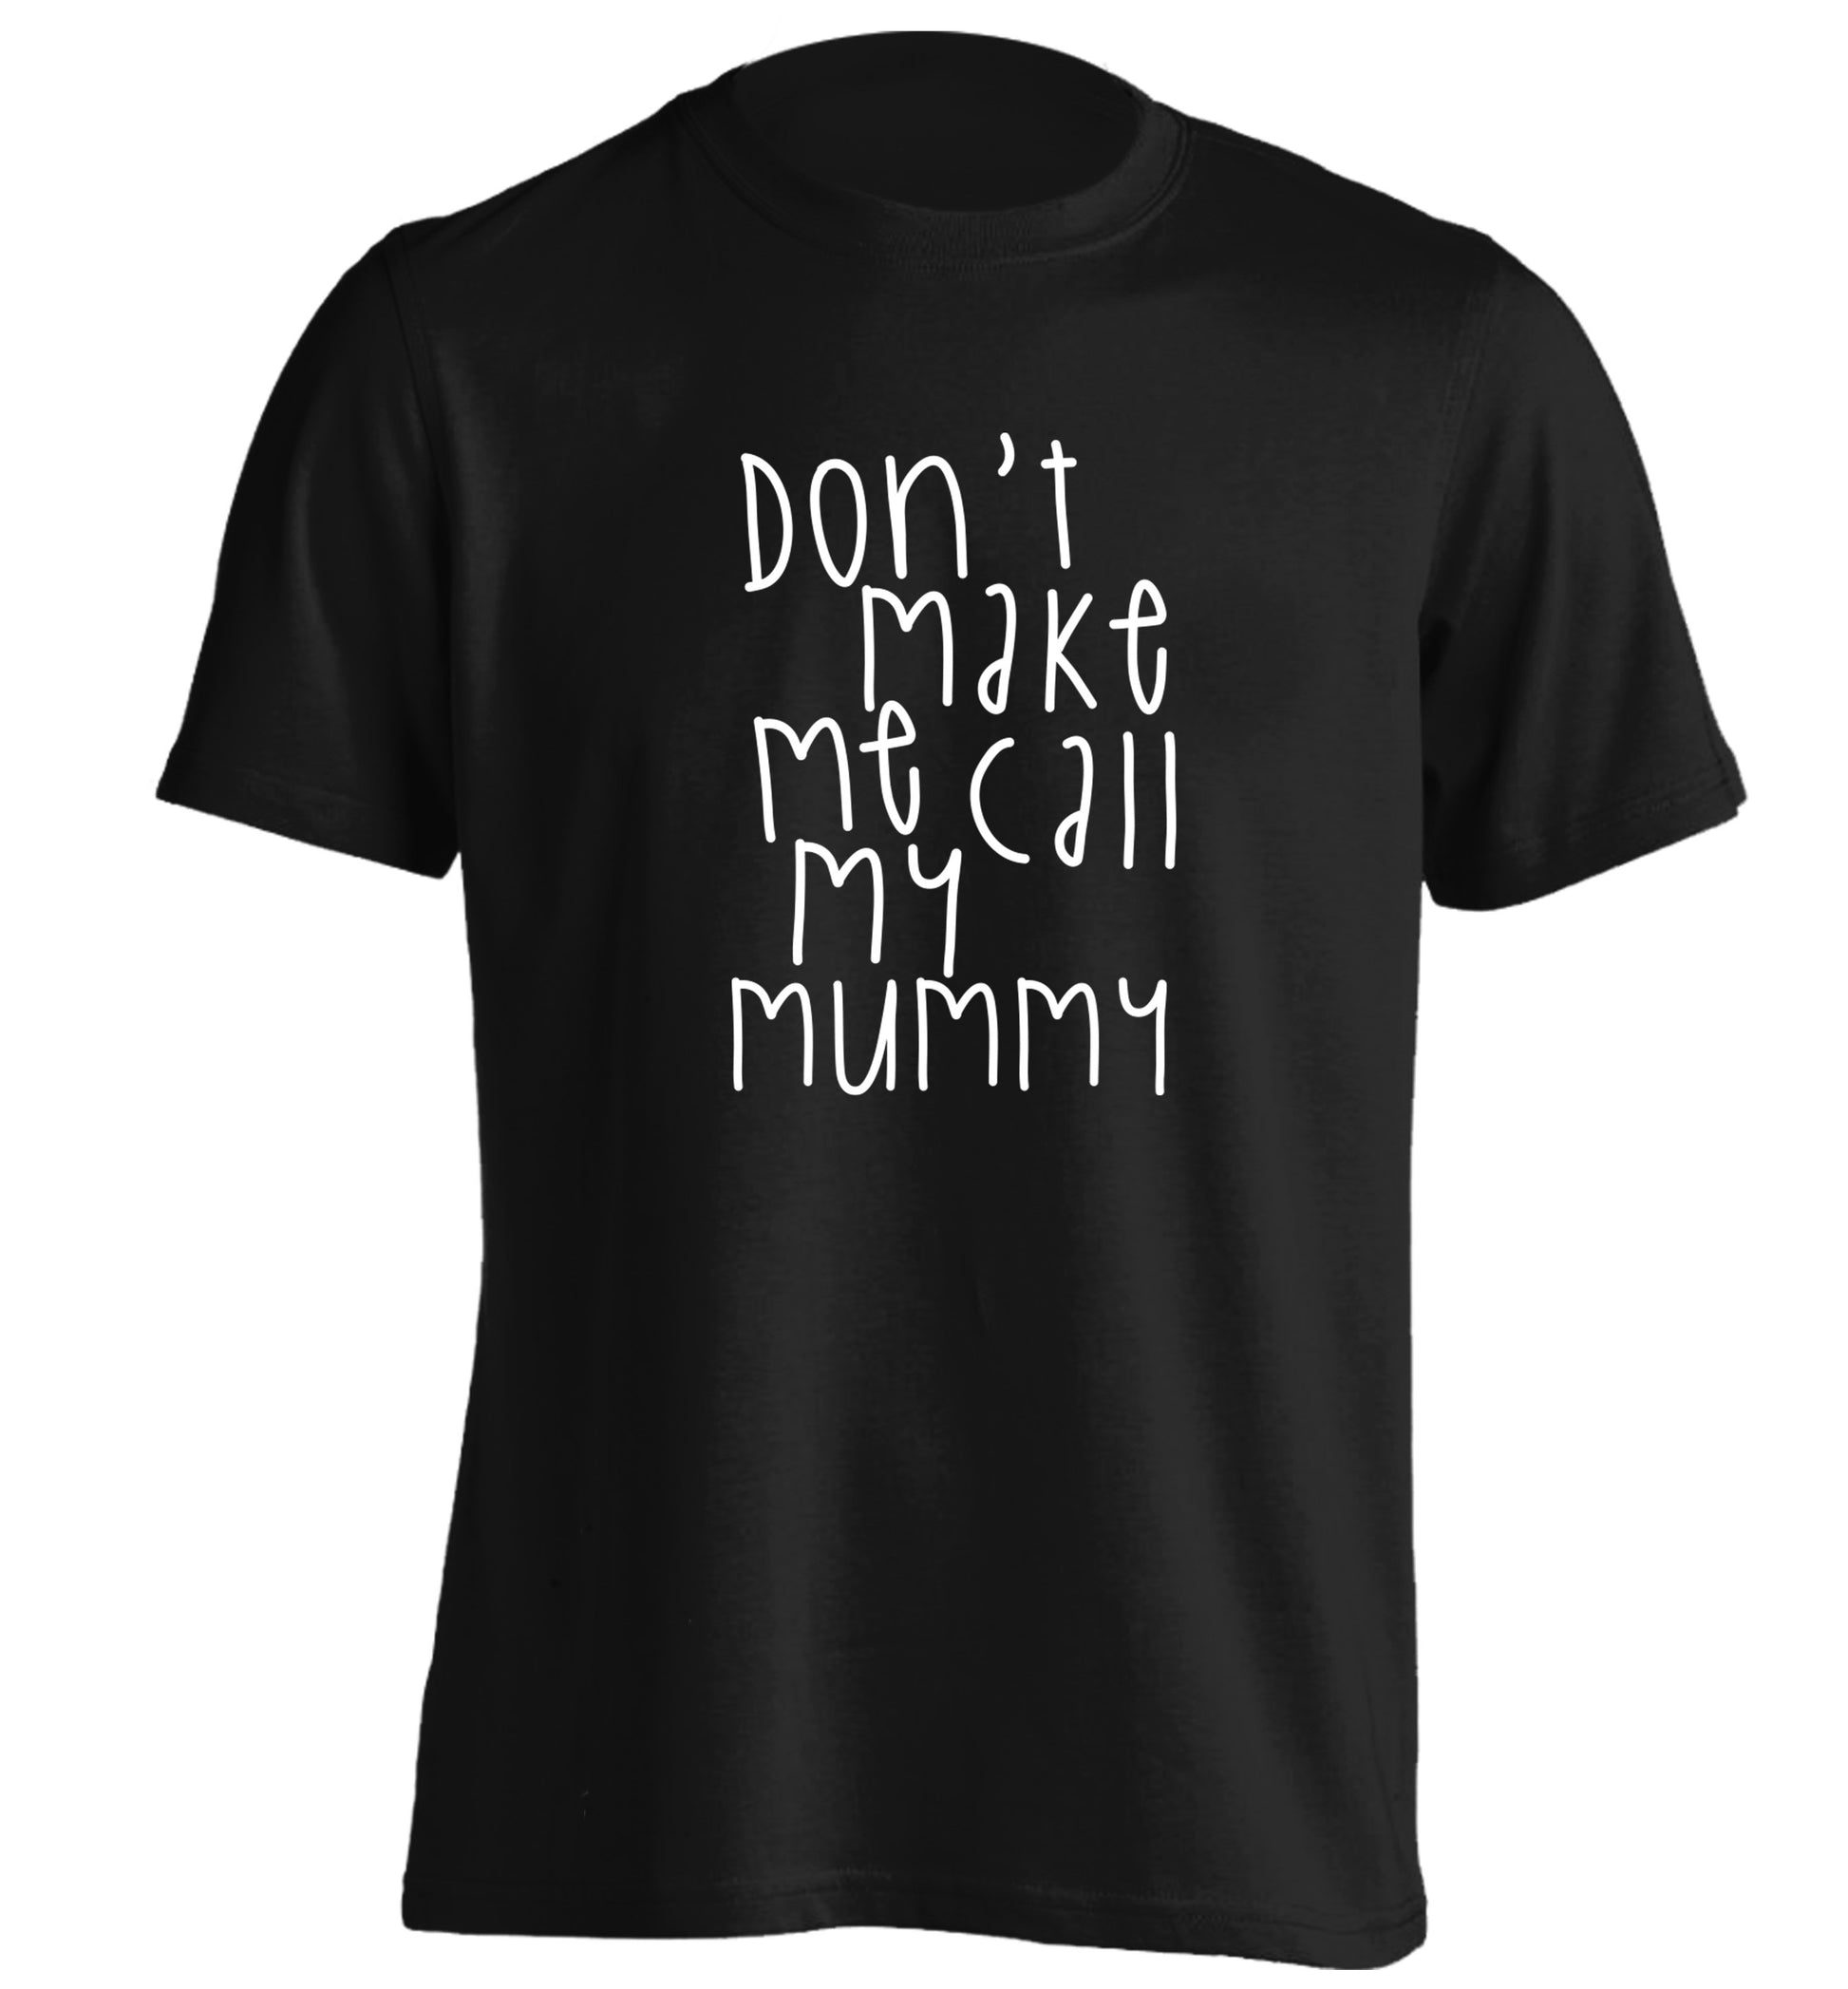 Don't make me call my mummy adults unisex black Tshirt 2XL